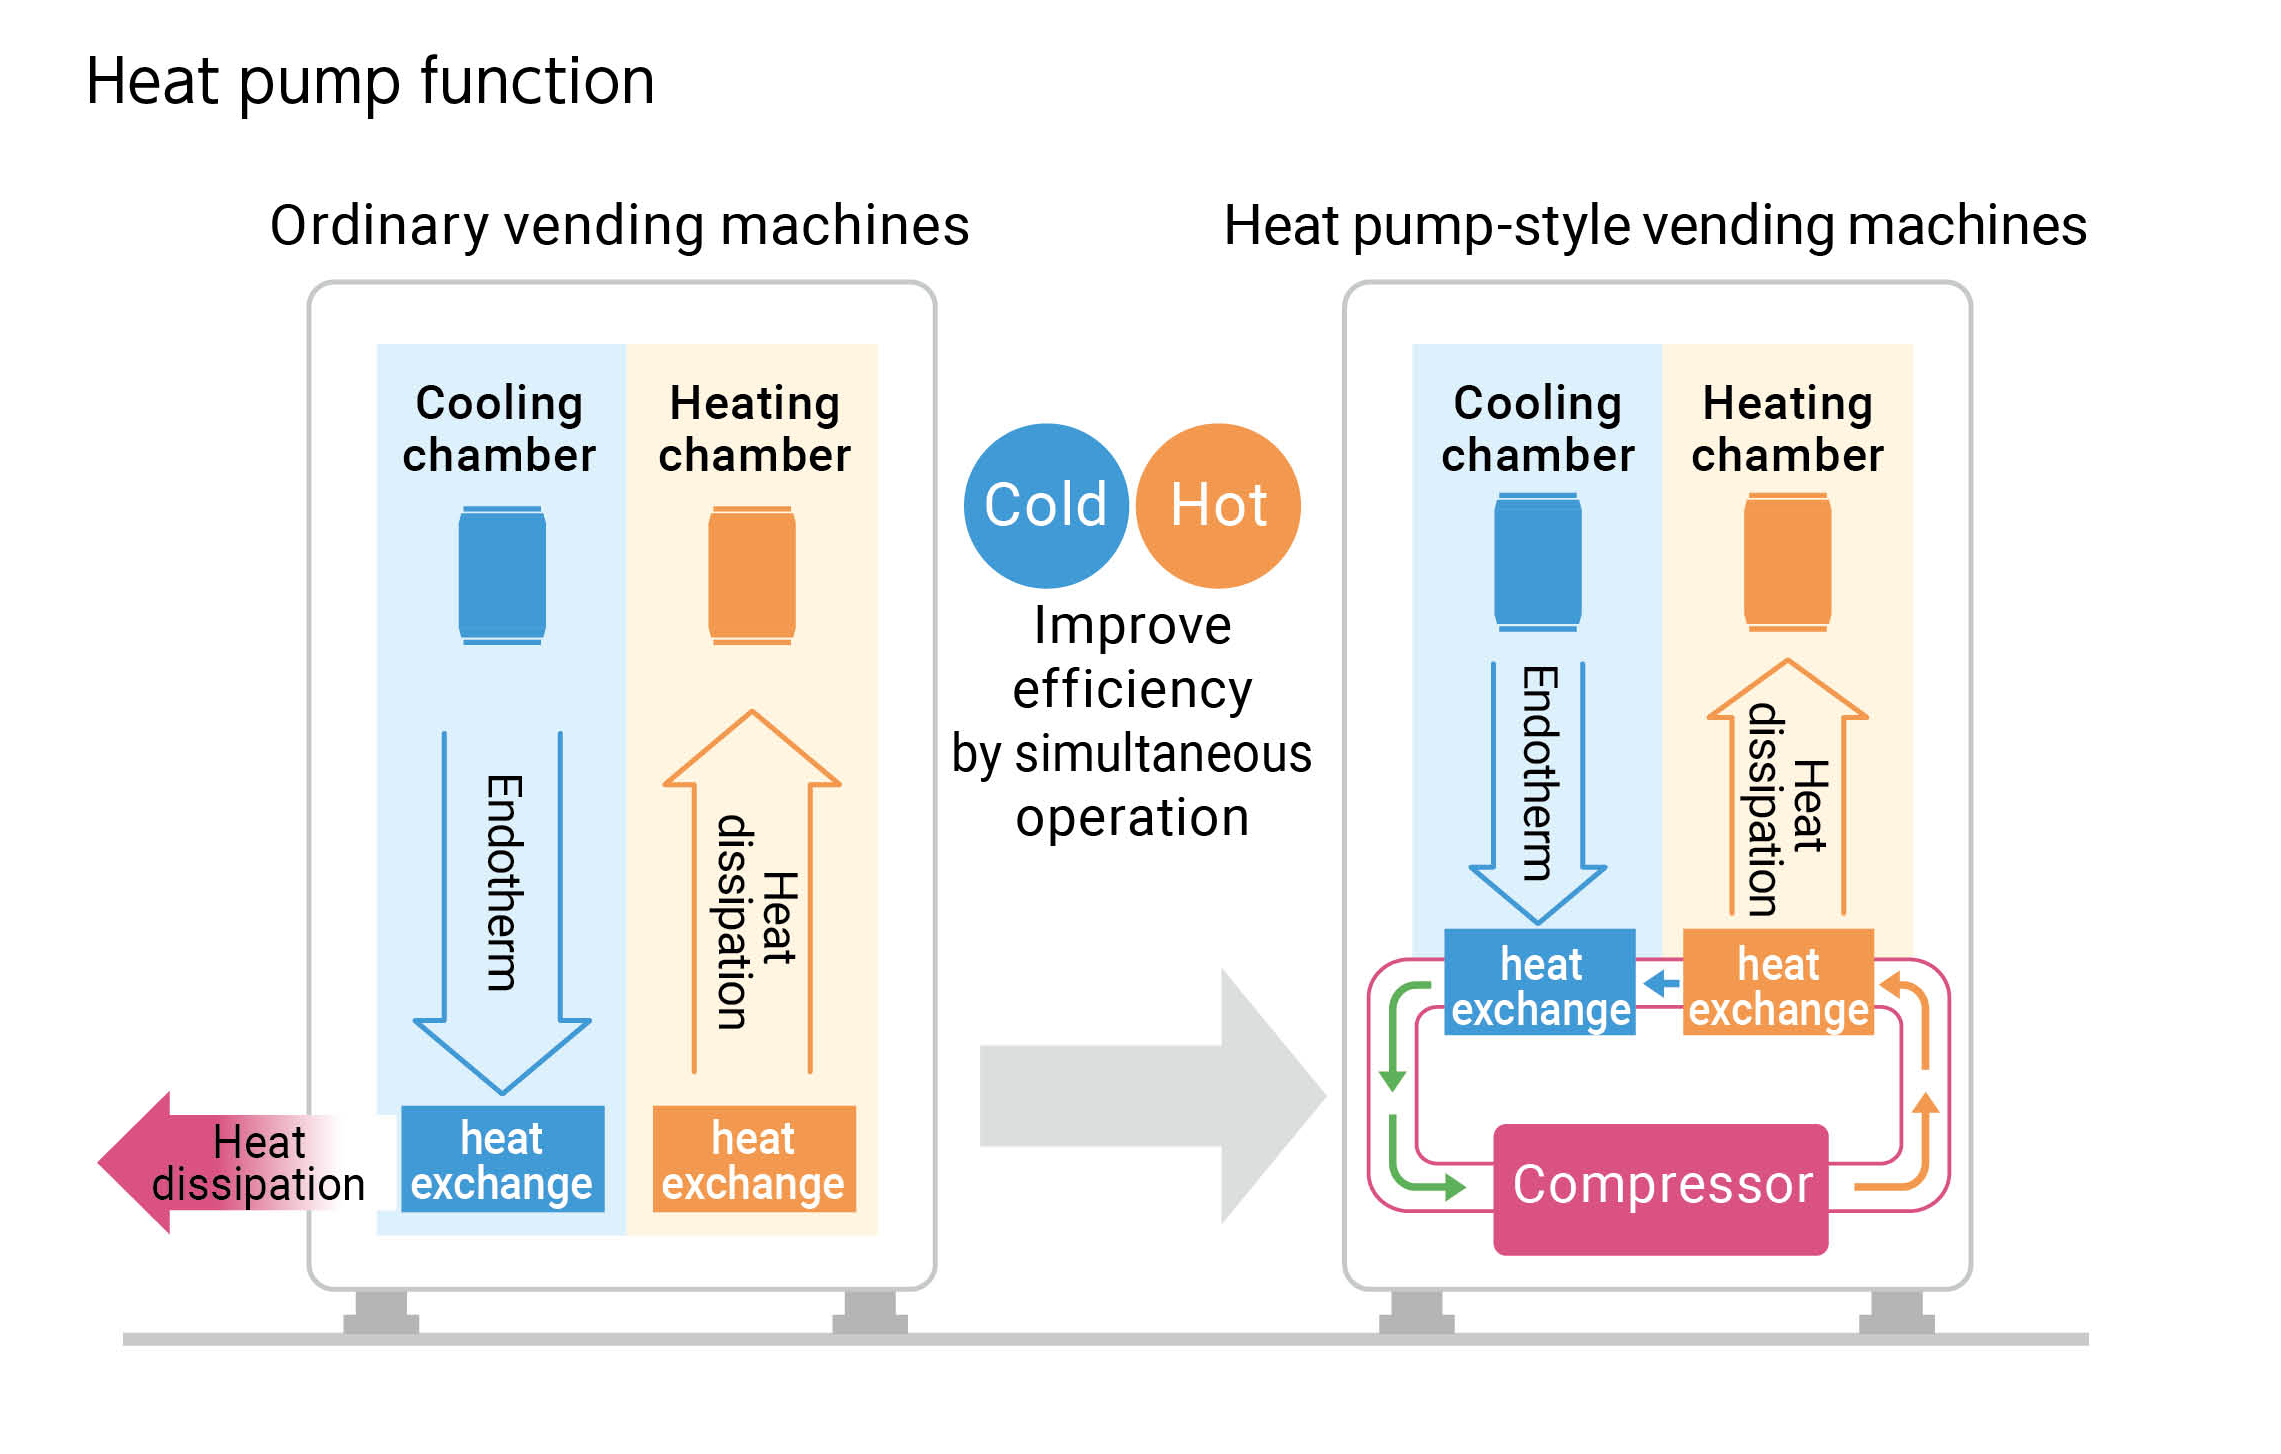 About heat pump